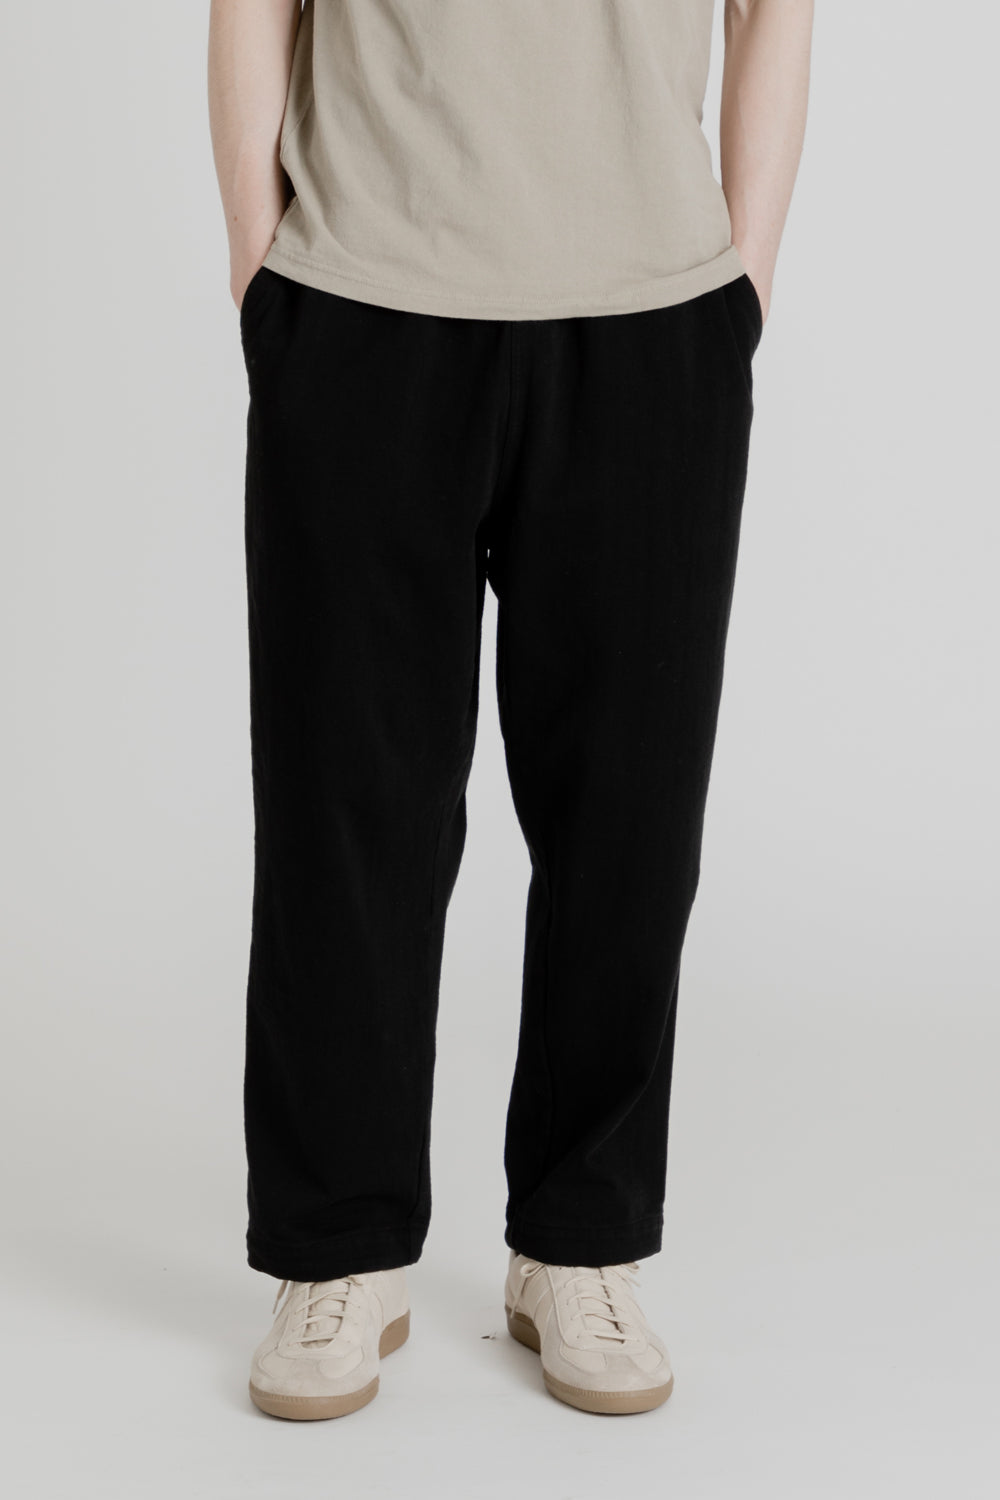 Jackman High-Density Rookie Pants in Black | Wallace Mercantile Shop